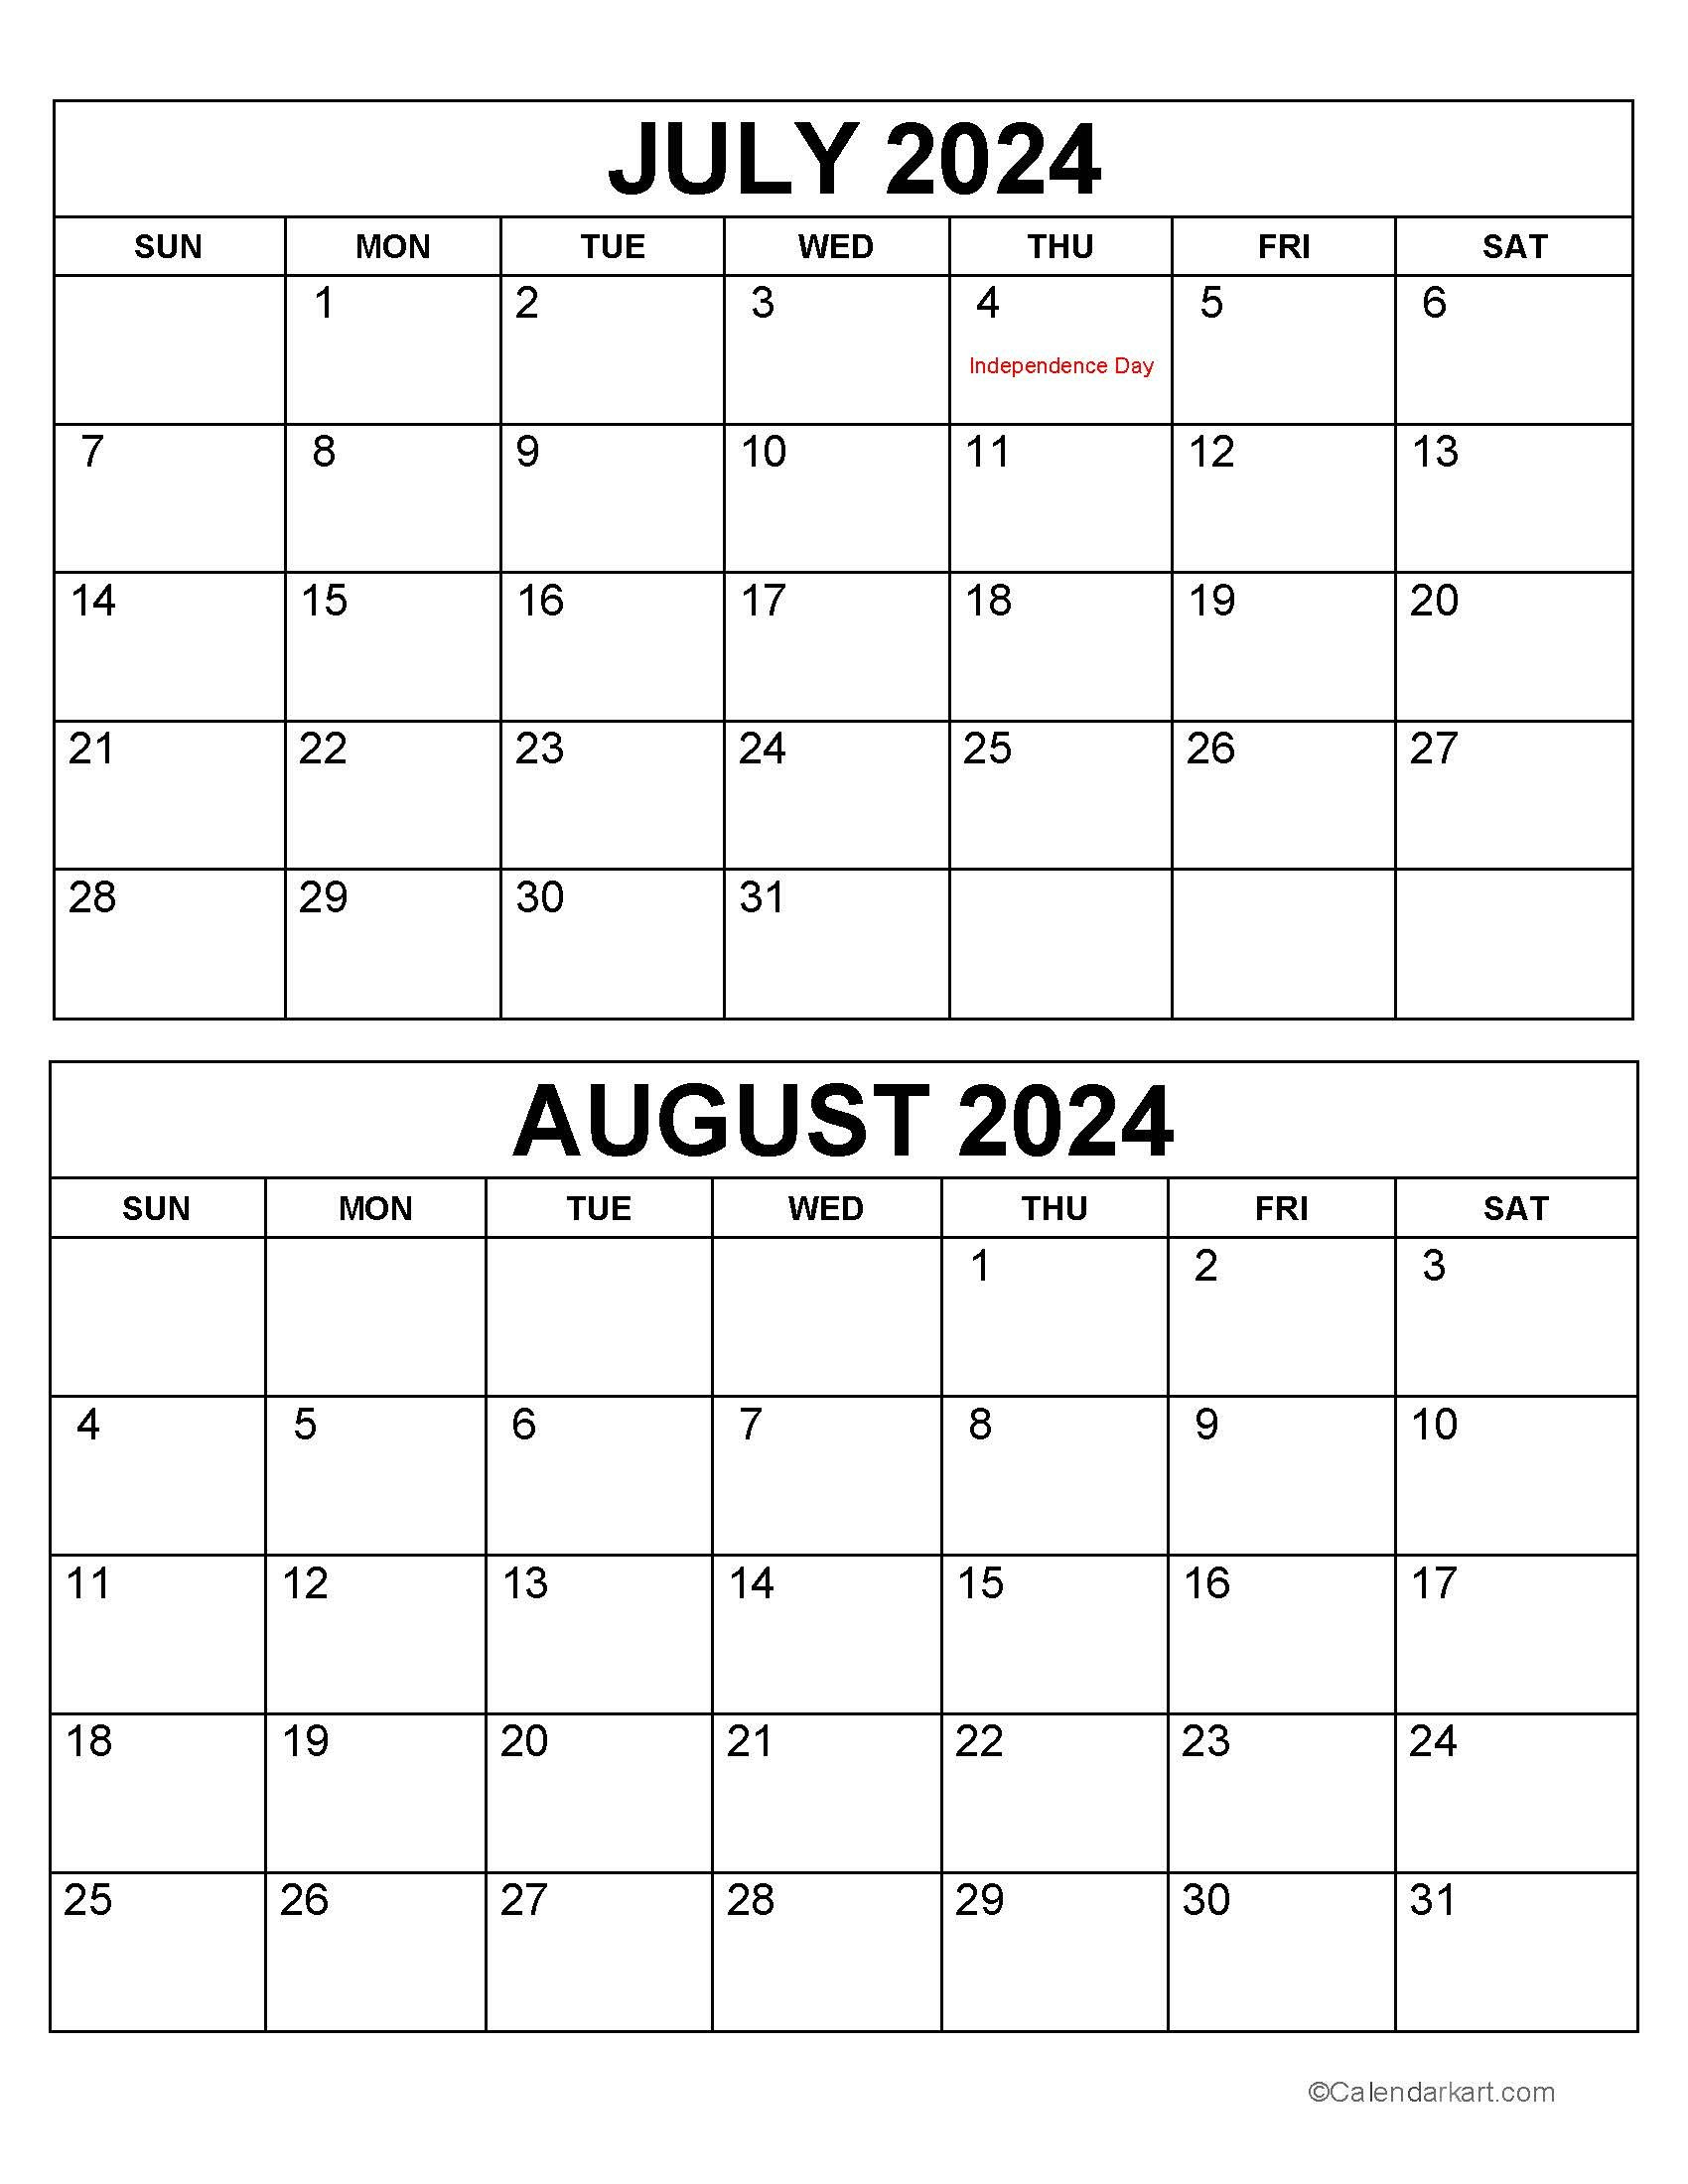 Printable July August 2024 Calendar | Calendarkart intended for 2024 July August Calendar